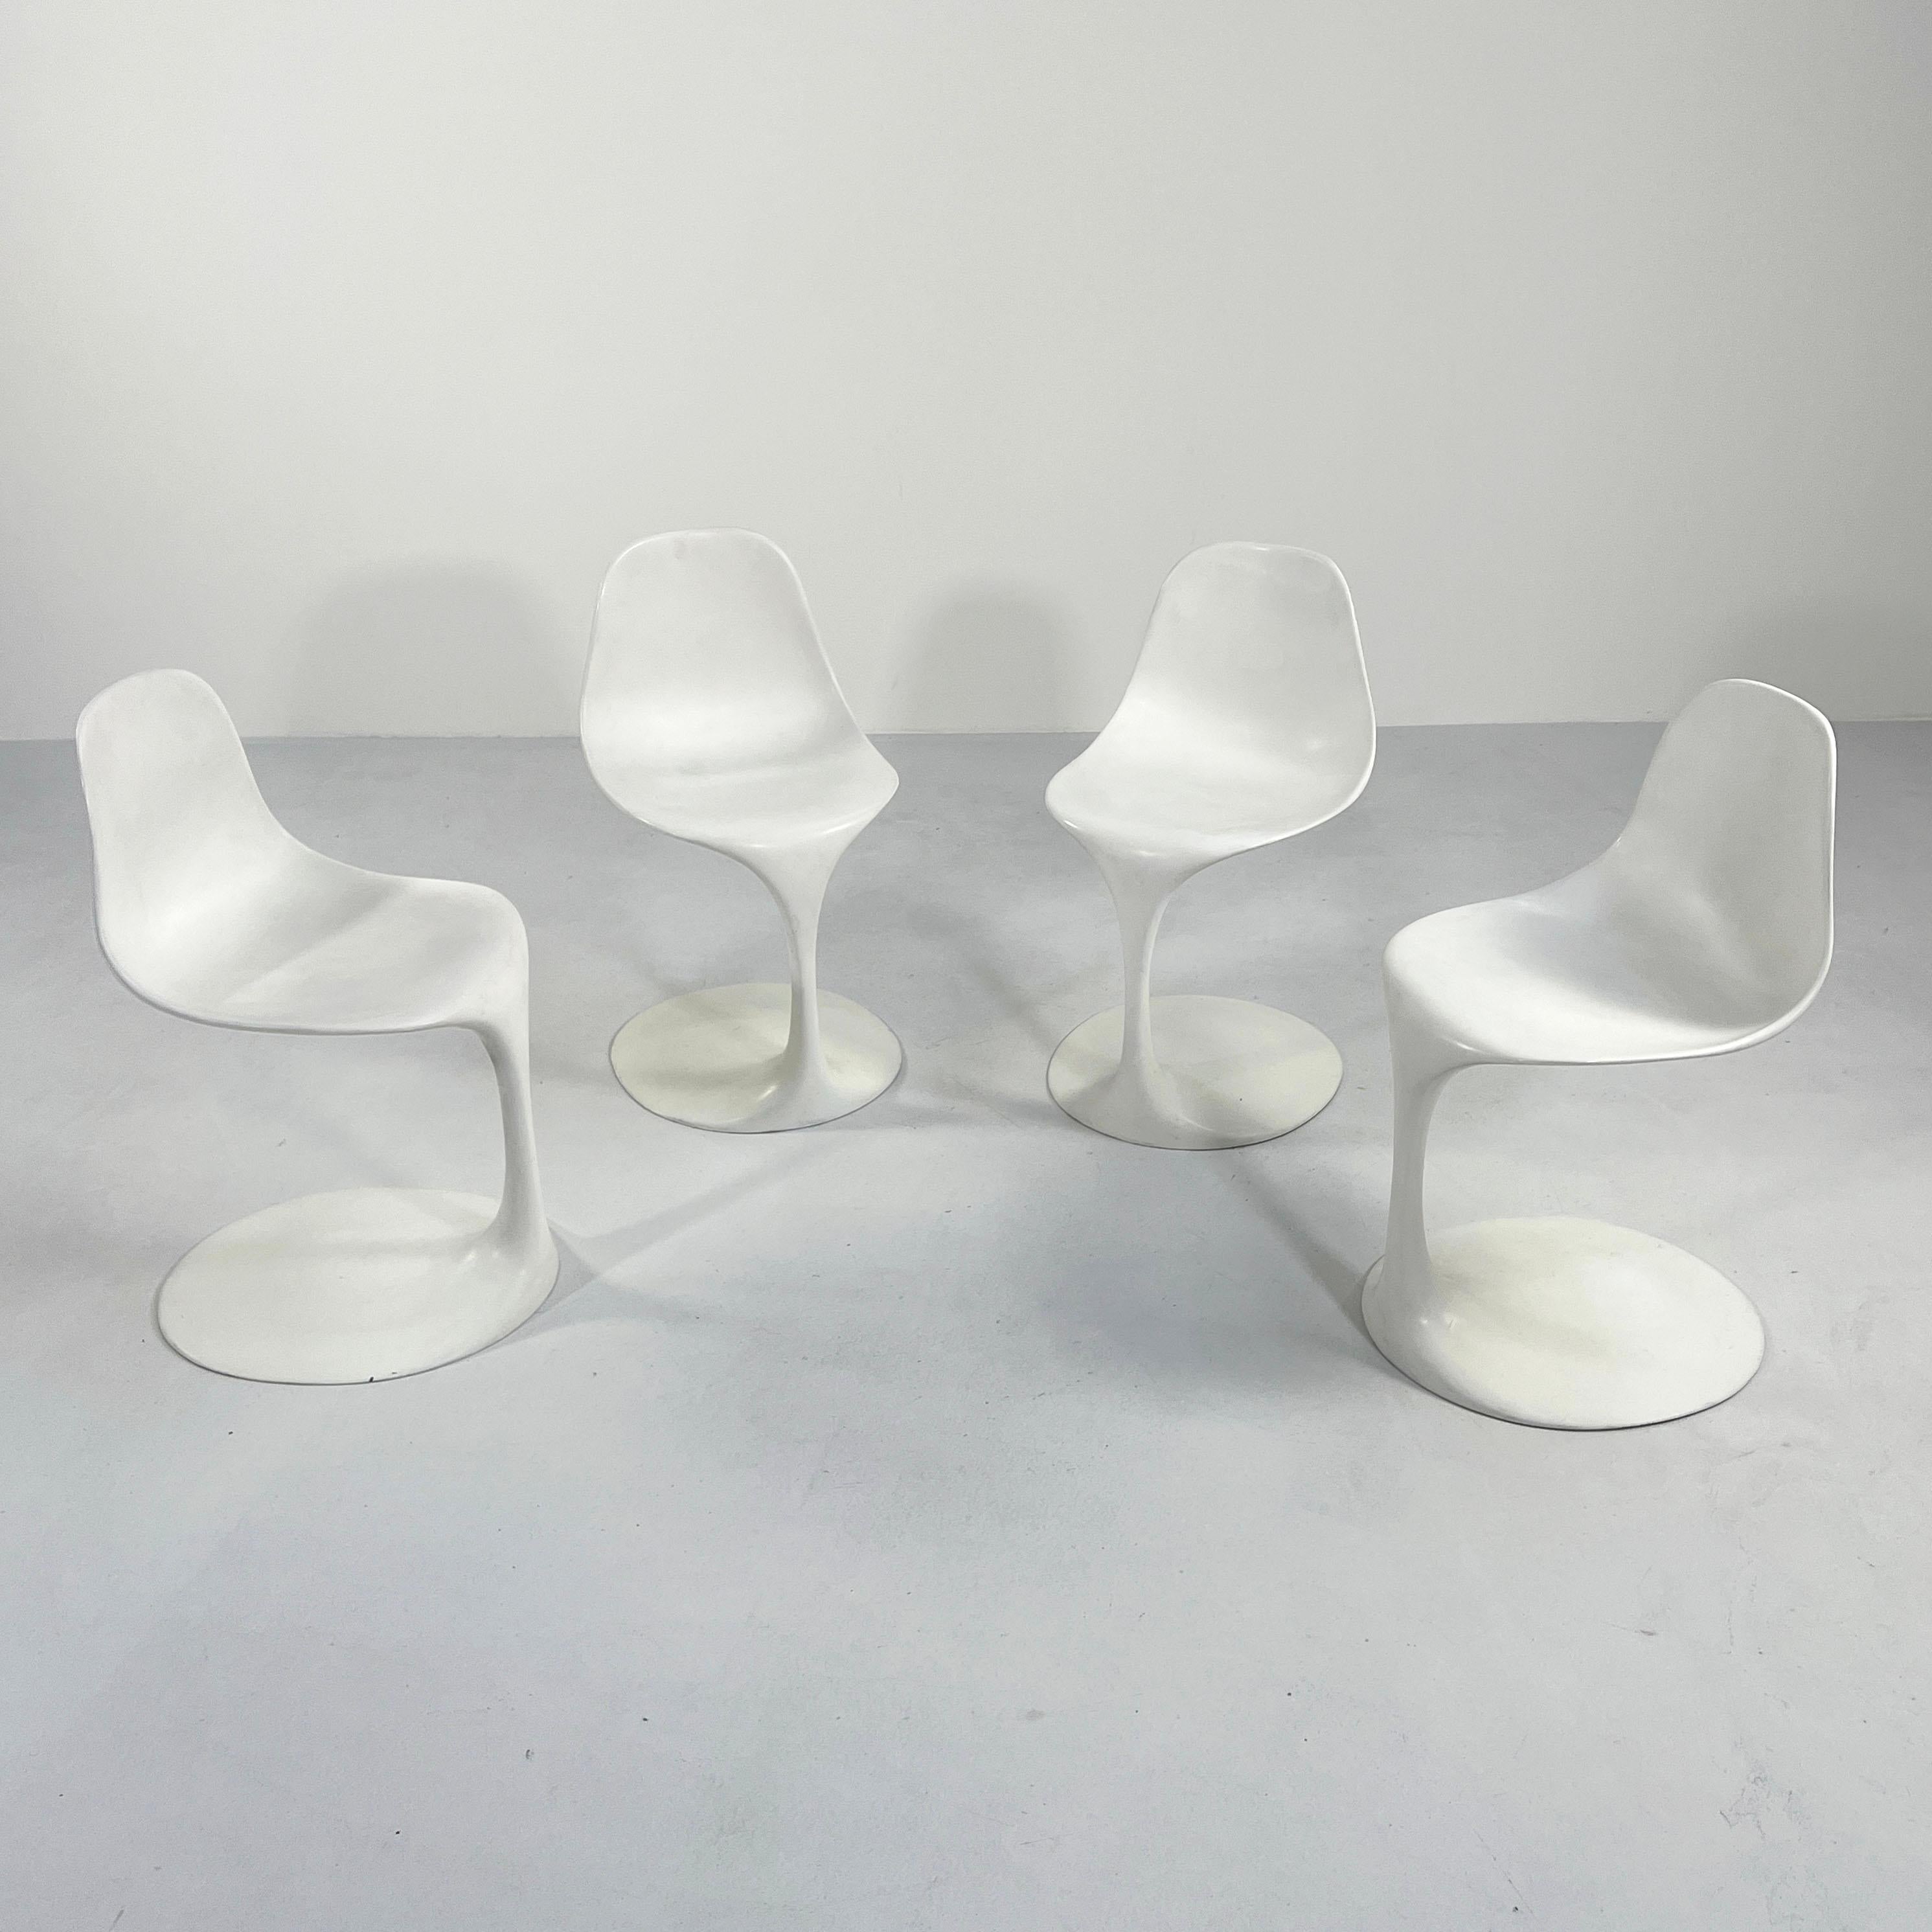 Set of 4 dining chairs by Rudi Bonzanini for Tecnosalotto, 1960s
Designer - Rudi Bonzanini 
Producer - Tecnosalotto
Design Period - Sixties
Measurements - Width 41 cm x Depth 45 cm x Height 78 cm x Seat Height 48 cm
Materials -